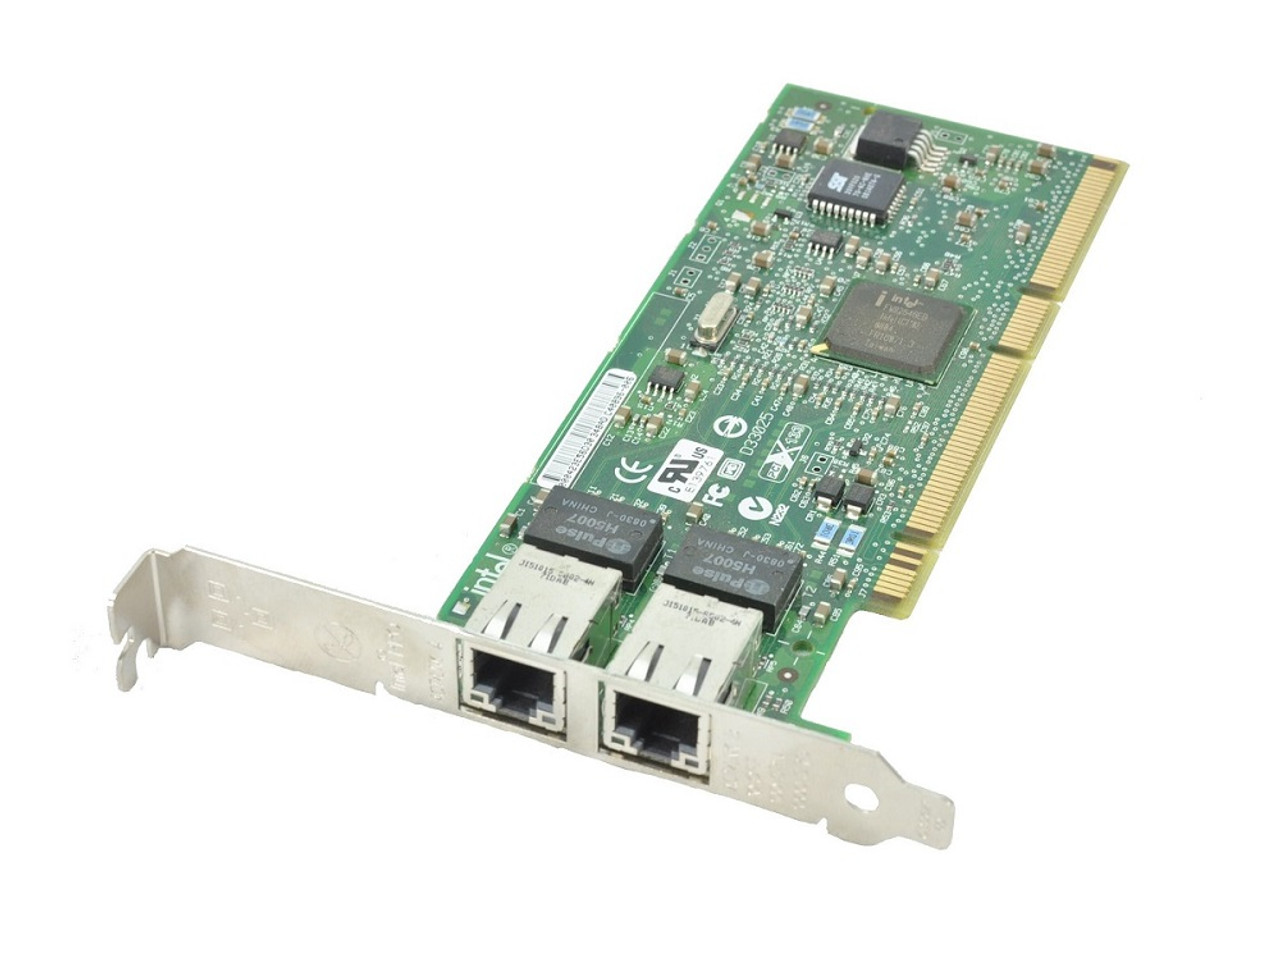 544QSFP - HP InfiniBand FDR/EN 10/40GB 2-Port 544QSFP Network Adapter